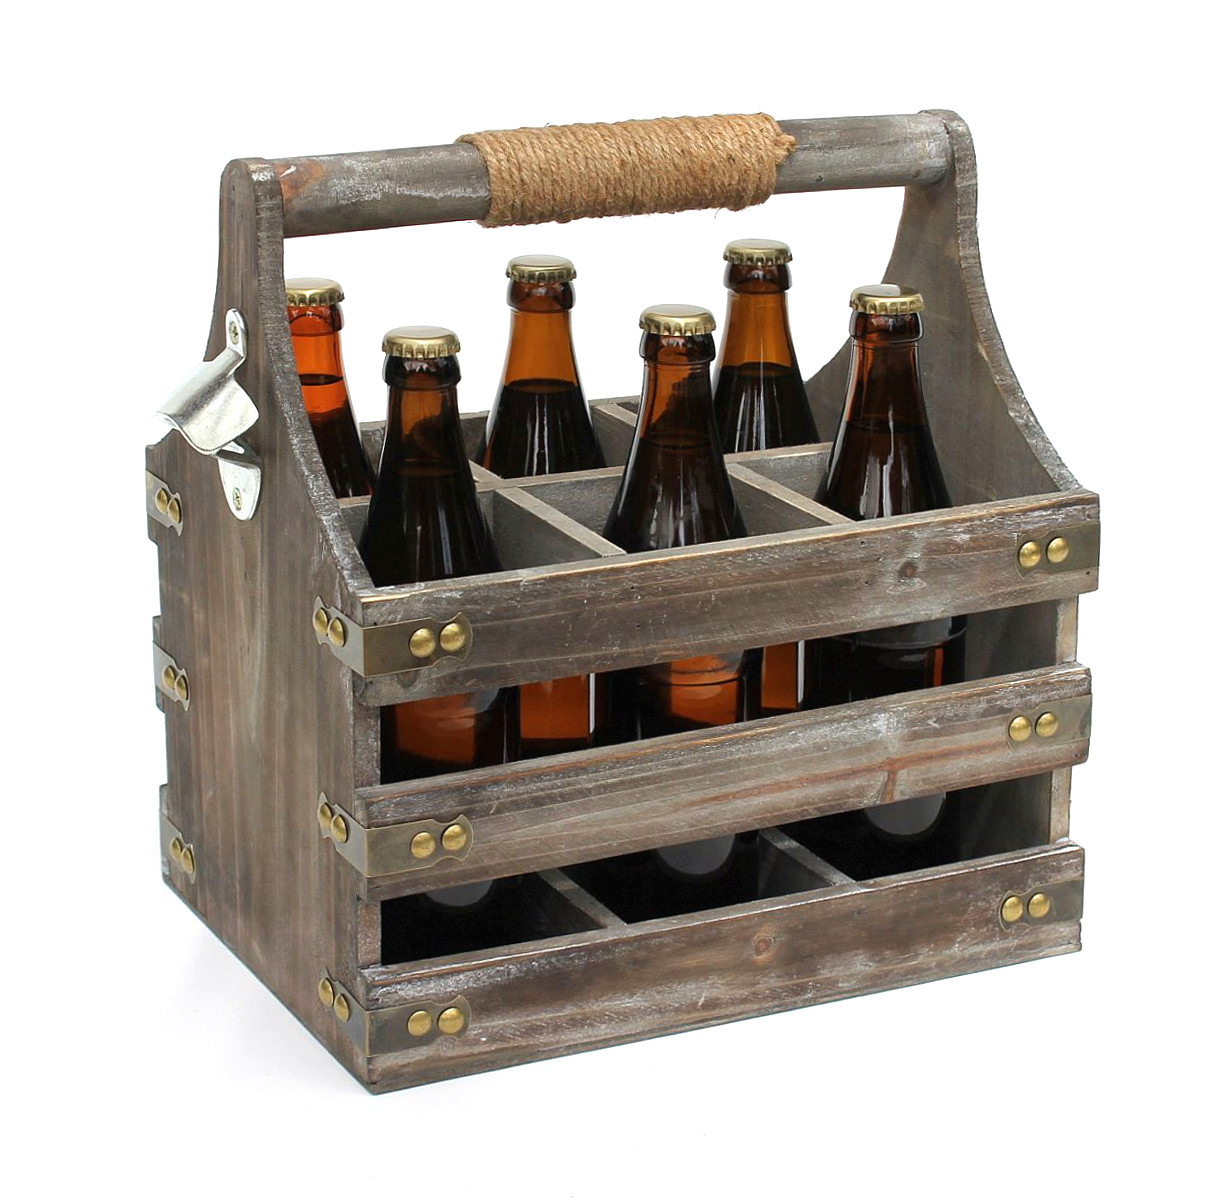 DanDiBo Bierträger aus Holz mit Öffner 93860 Flaschenträger Flaschenöffner Flaschenkorb  Männerhandtasche Männergeschenke-DanDiBo | Flaschenkörbe